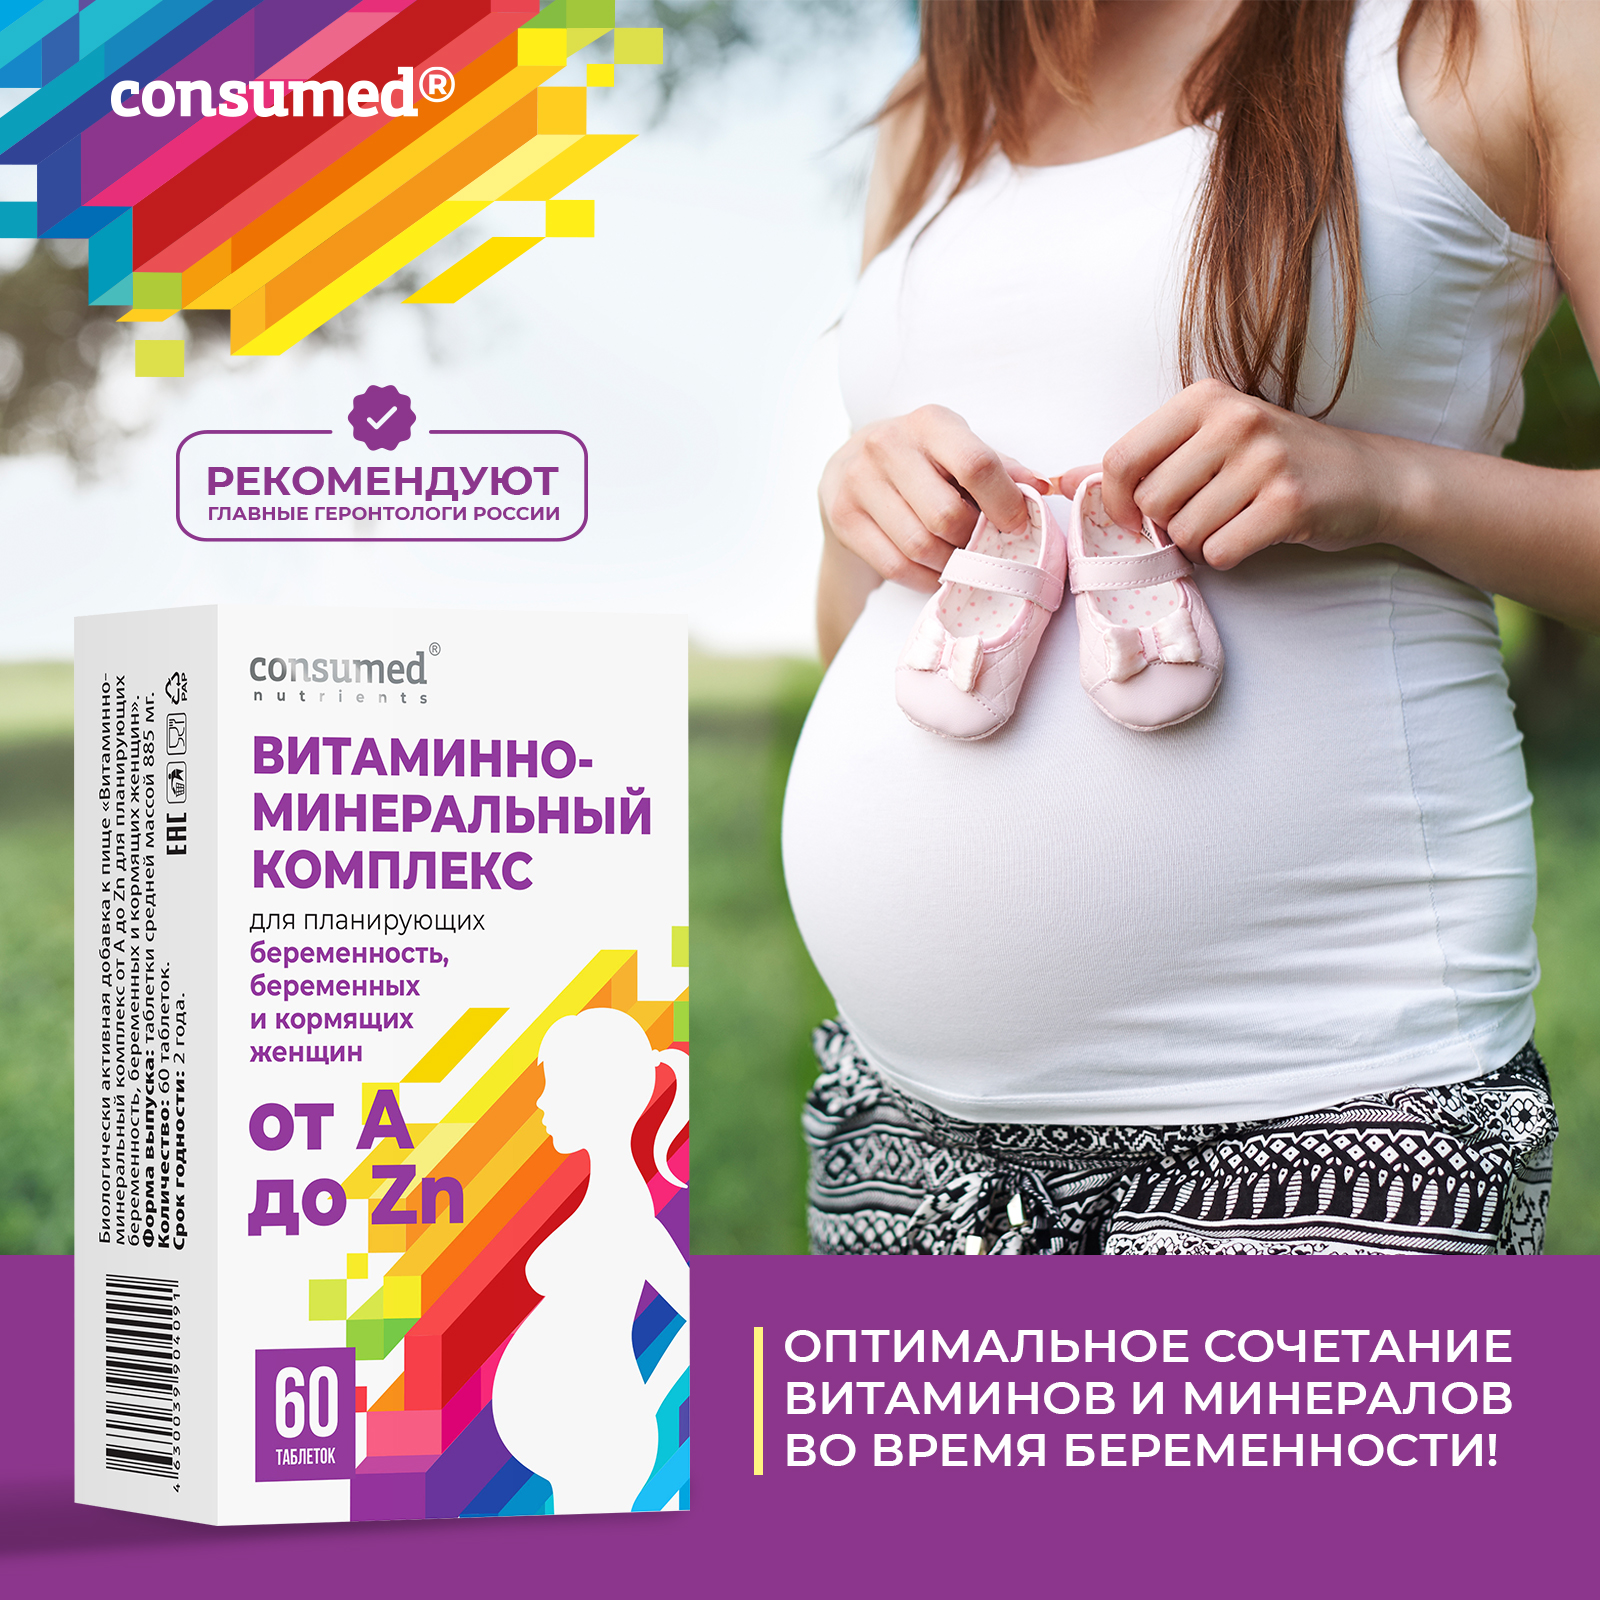 Витамин E при планировании беременности – Фемибион